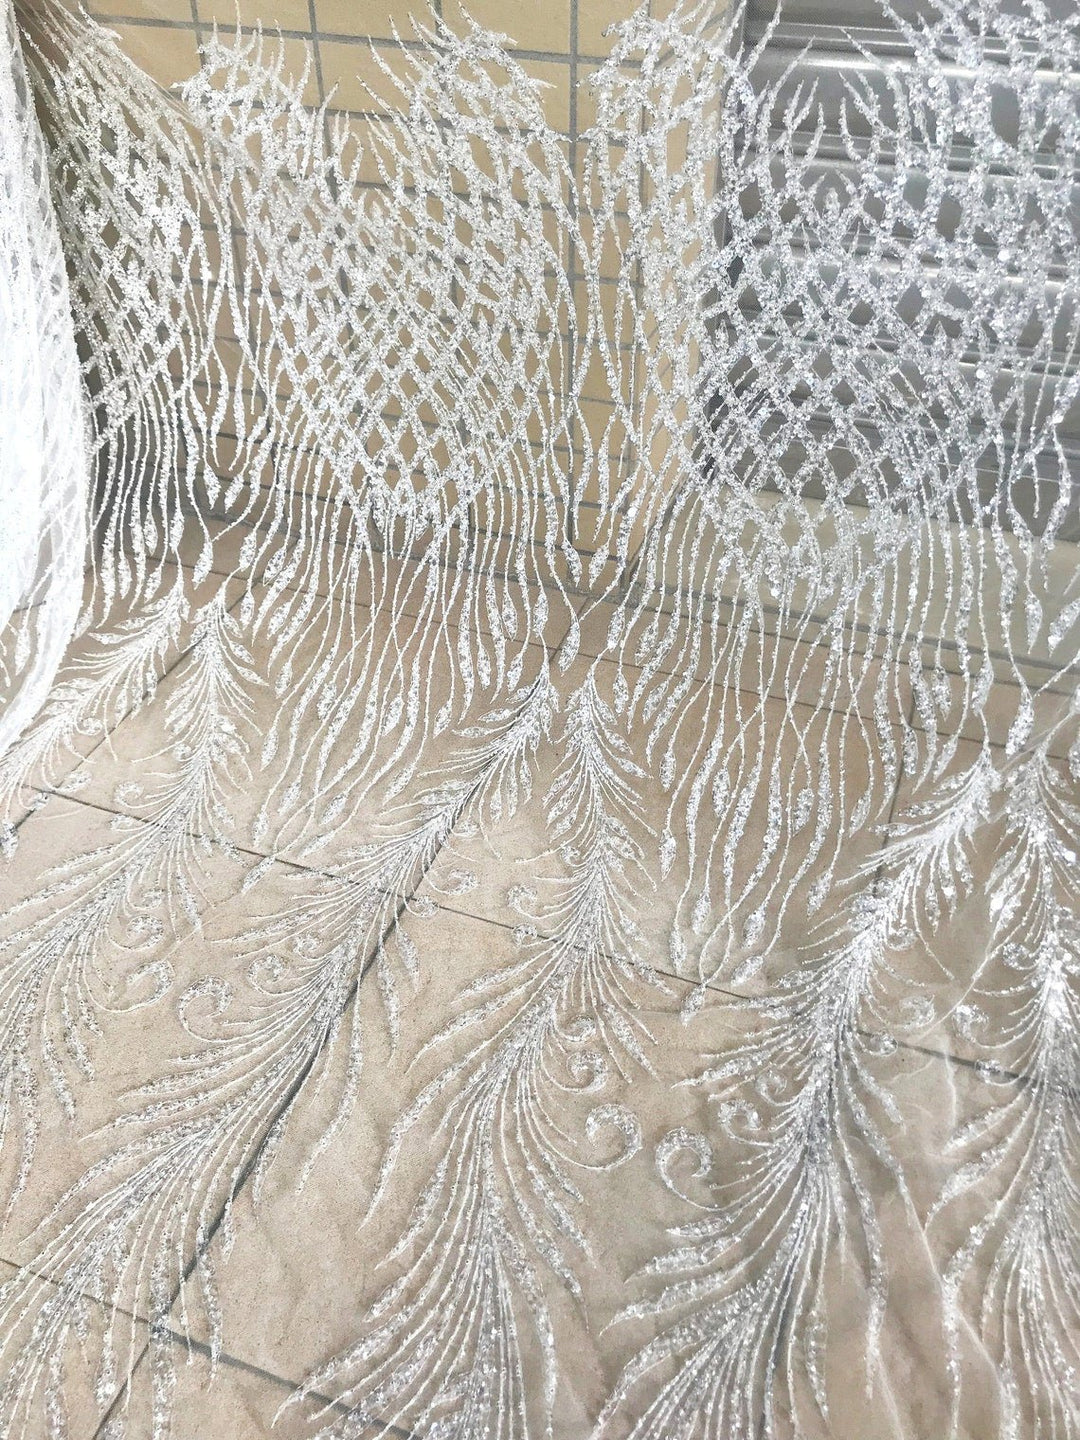 5 YARDS / Geometric Silver Beaded Glitter Embroidery Mesh Lace Dress Fabric - Classic & Modern